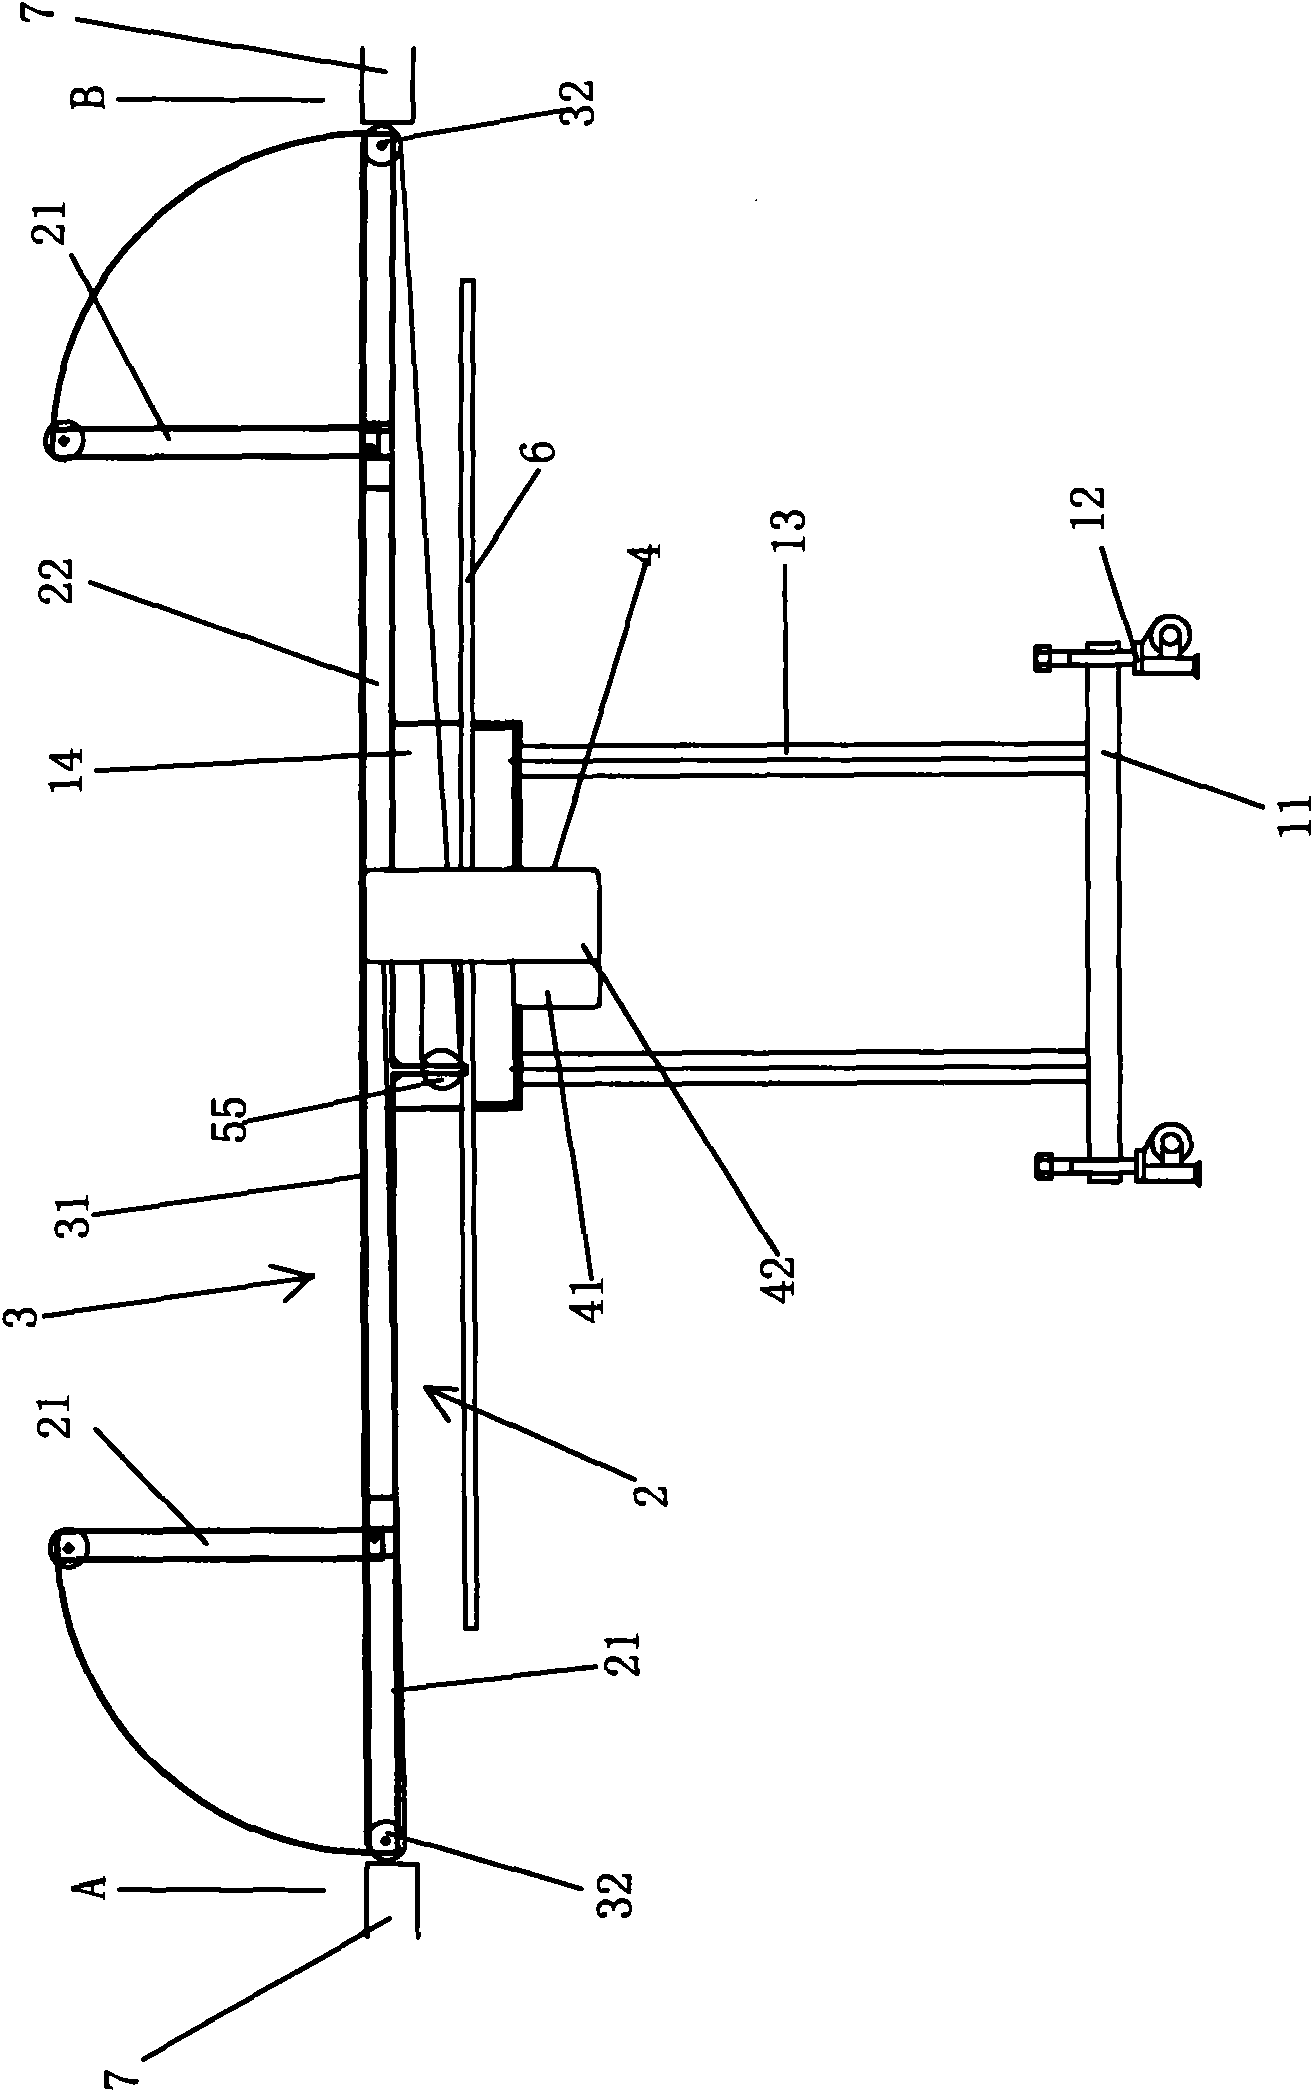 Connecting line mechanism of centreless grinder